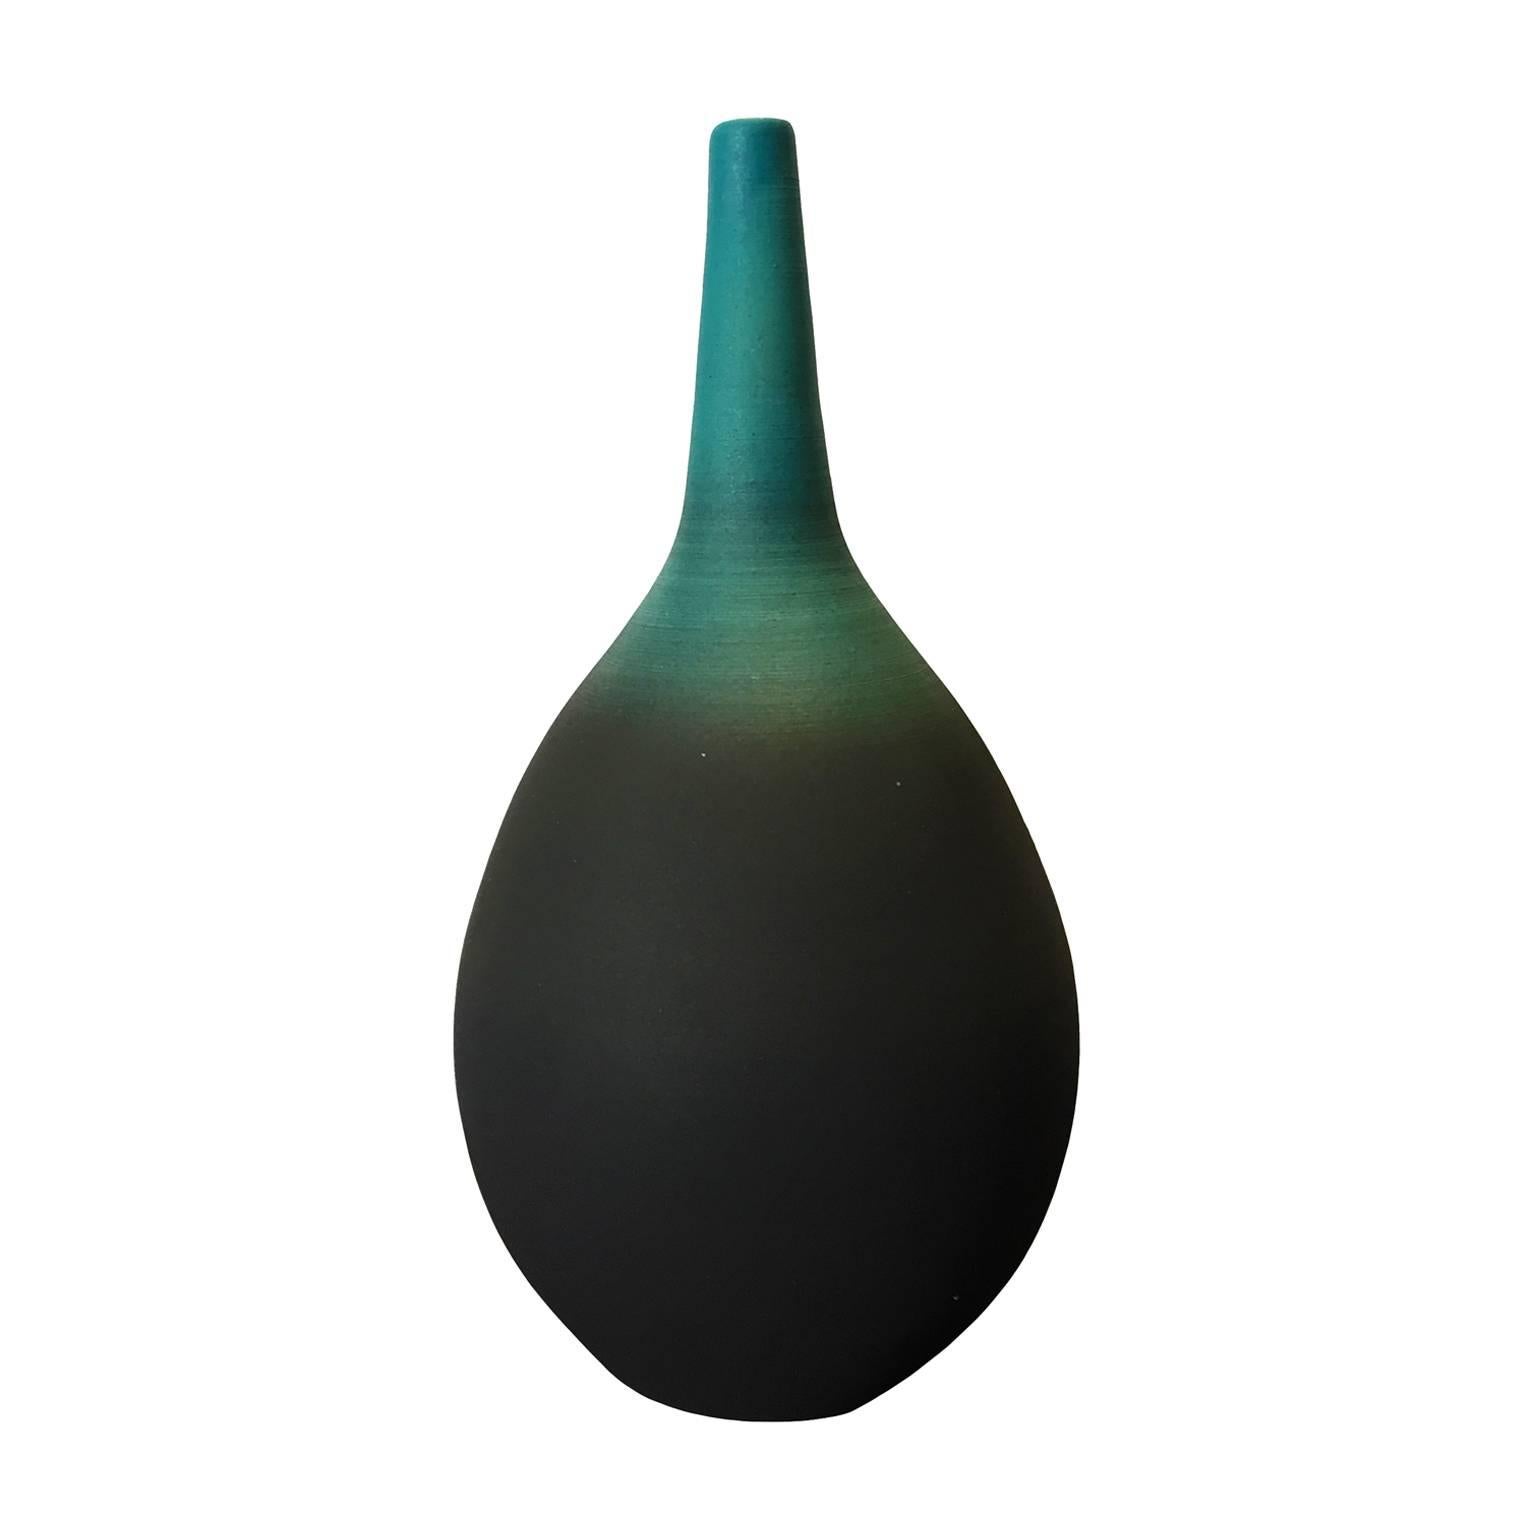 Turquoise Ombre Matte Ceramic Tear Drop Vase with Long Neck by Sandi Fellman